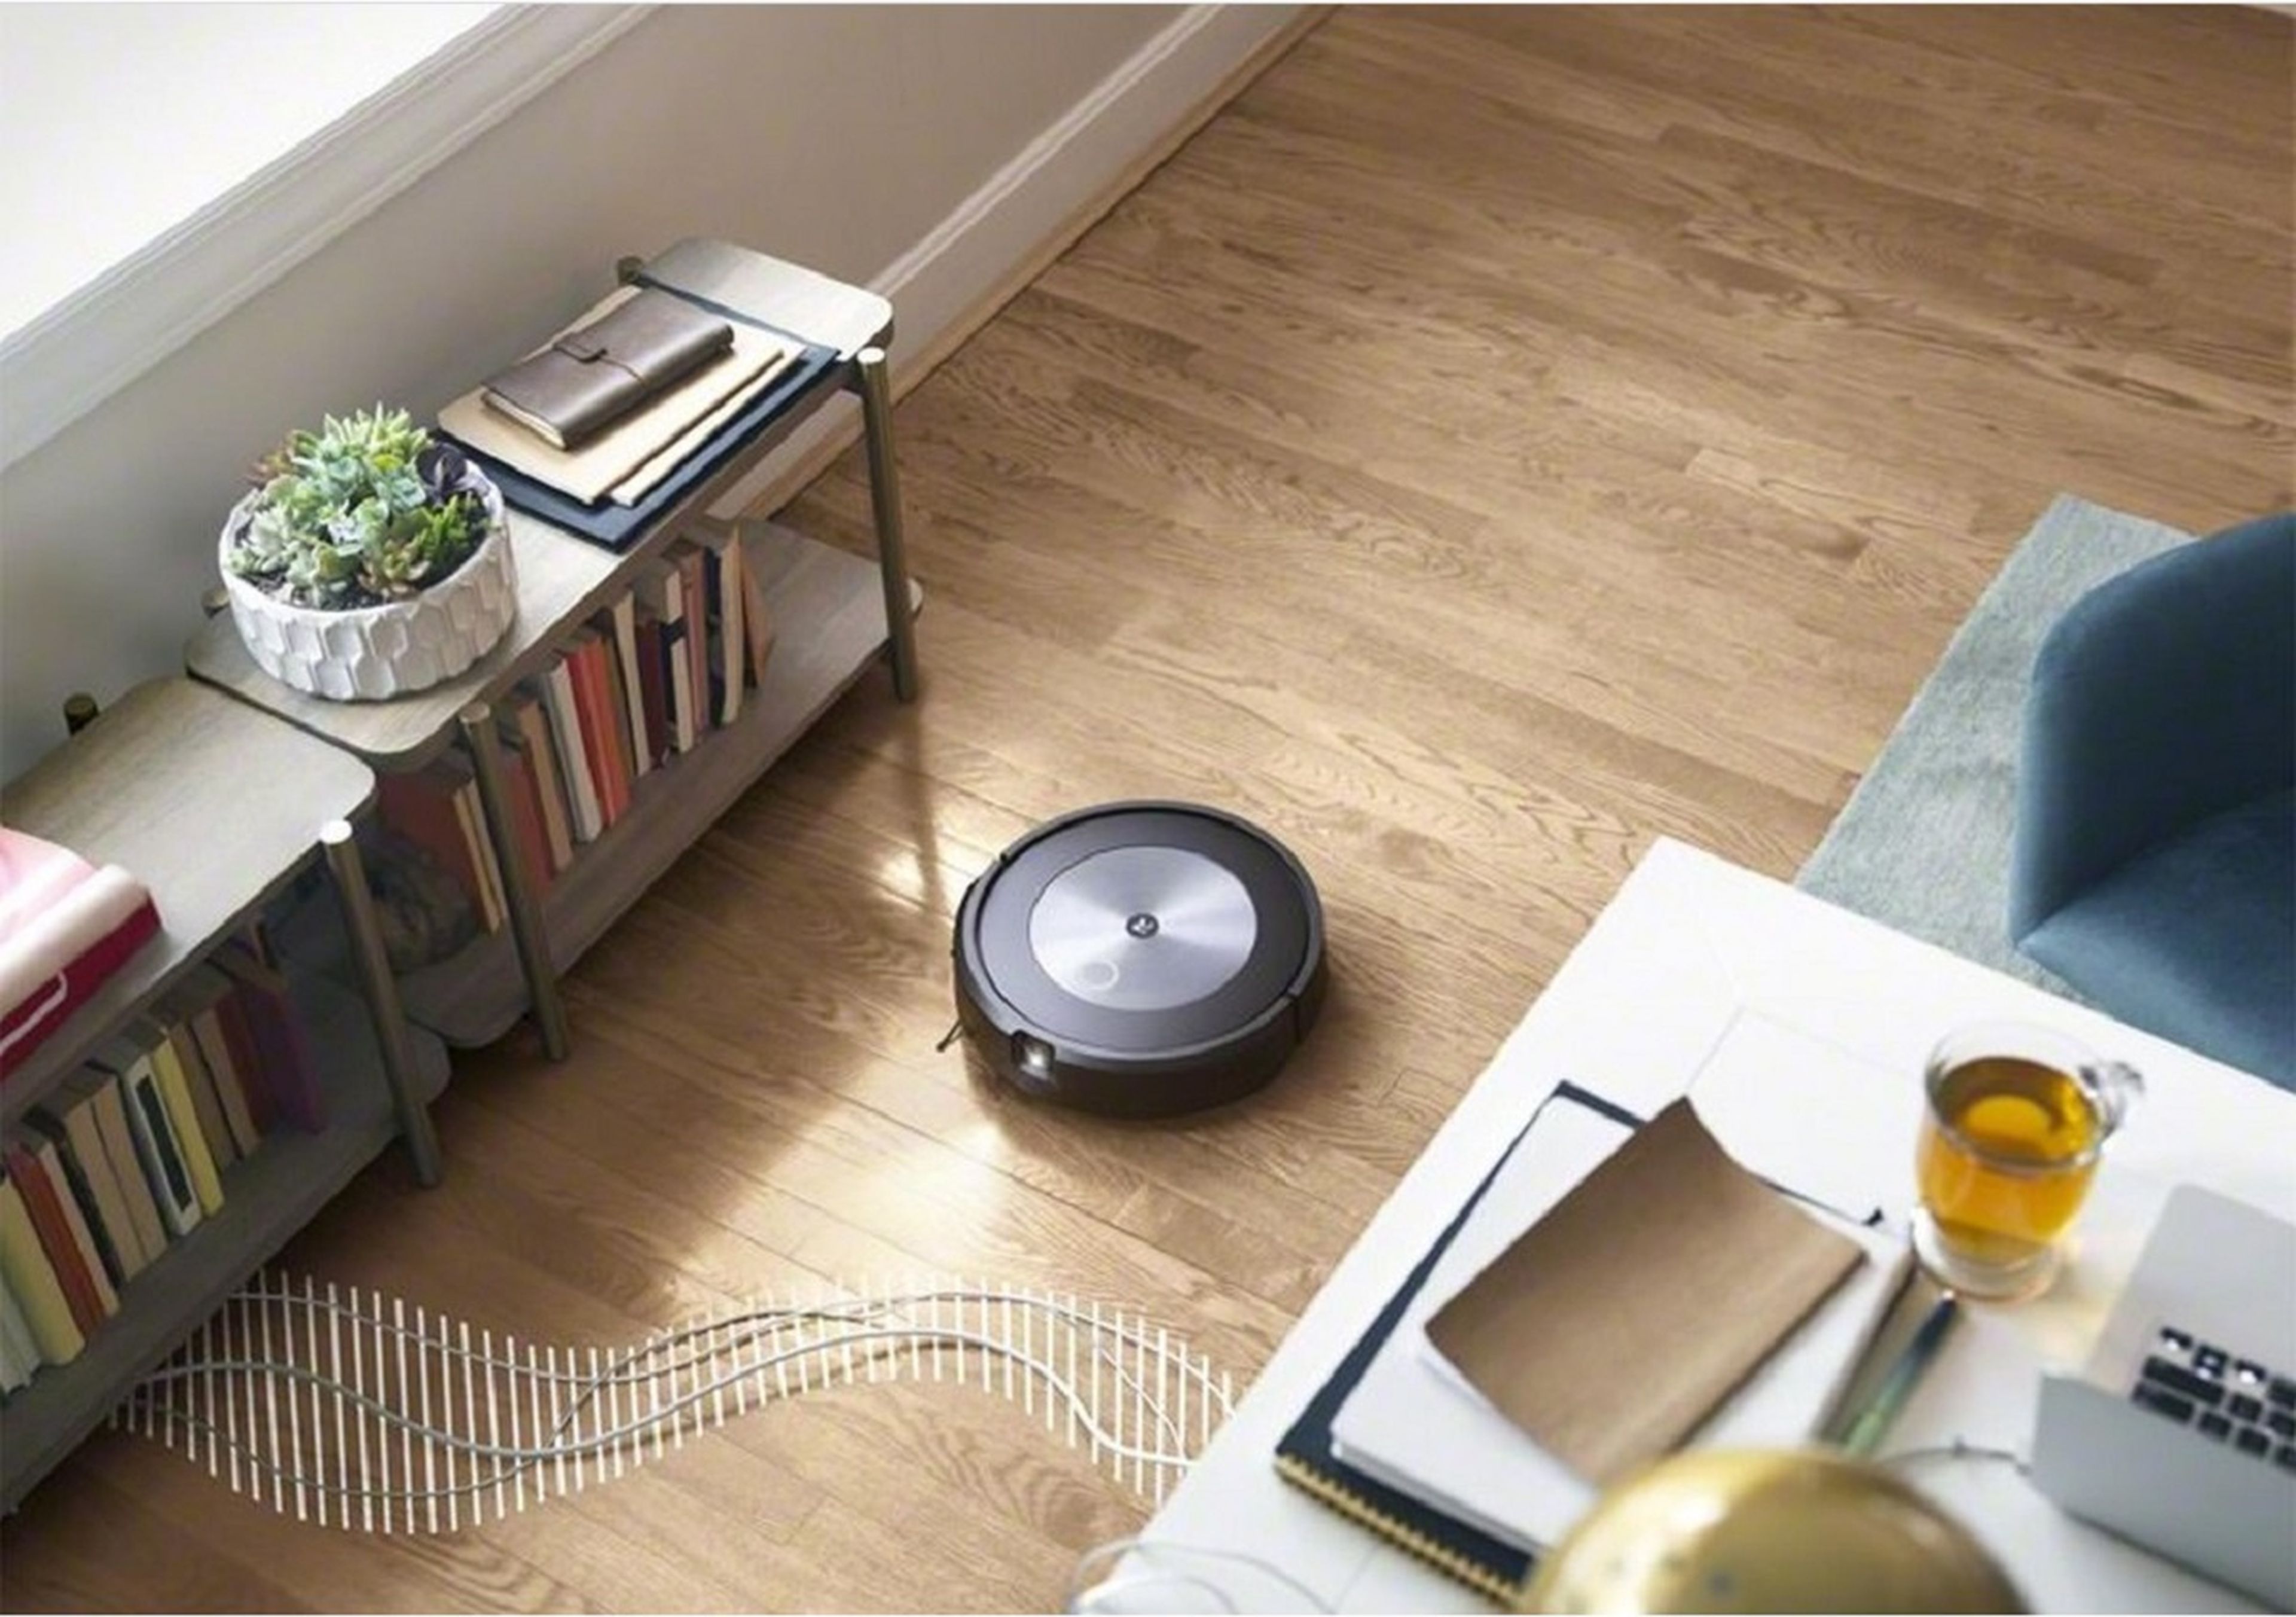 La primera Roomba de iRobot que aspira y/o friega de manera selectiva gracias a un curioso mecanismo